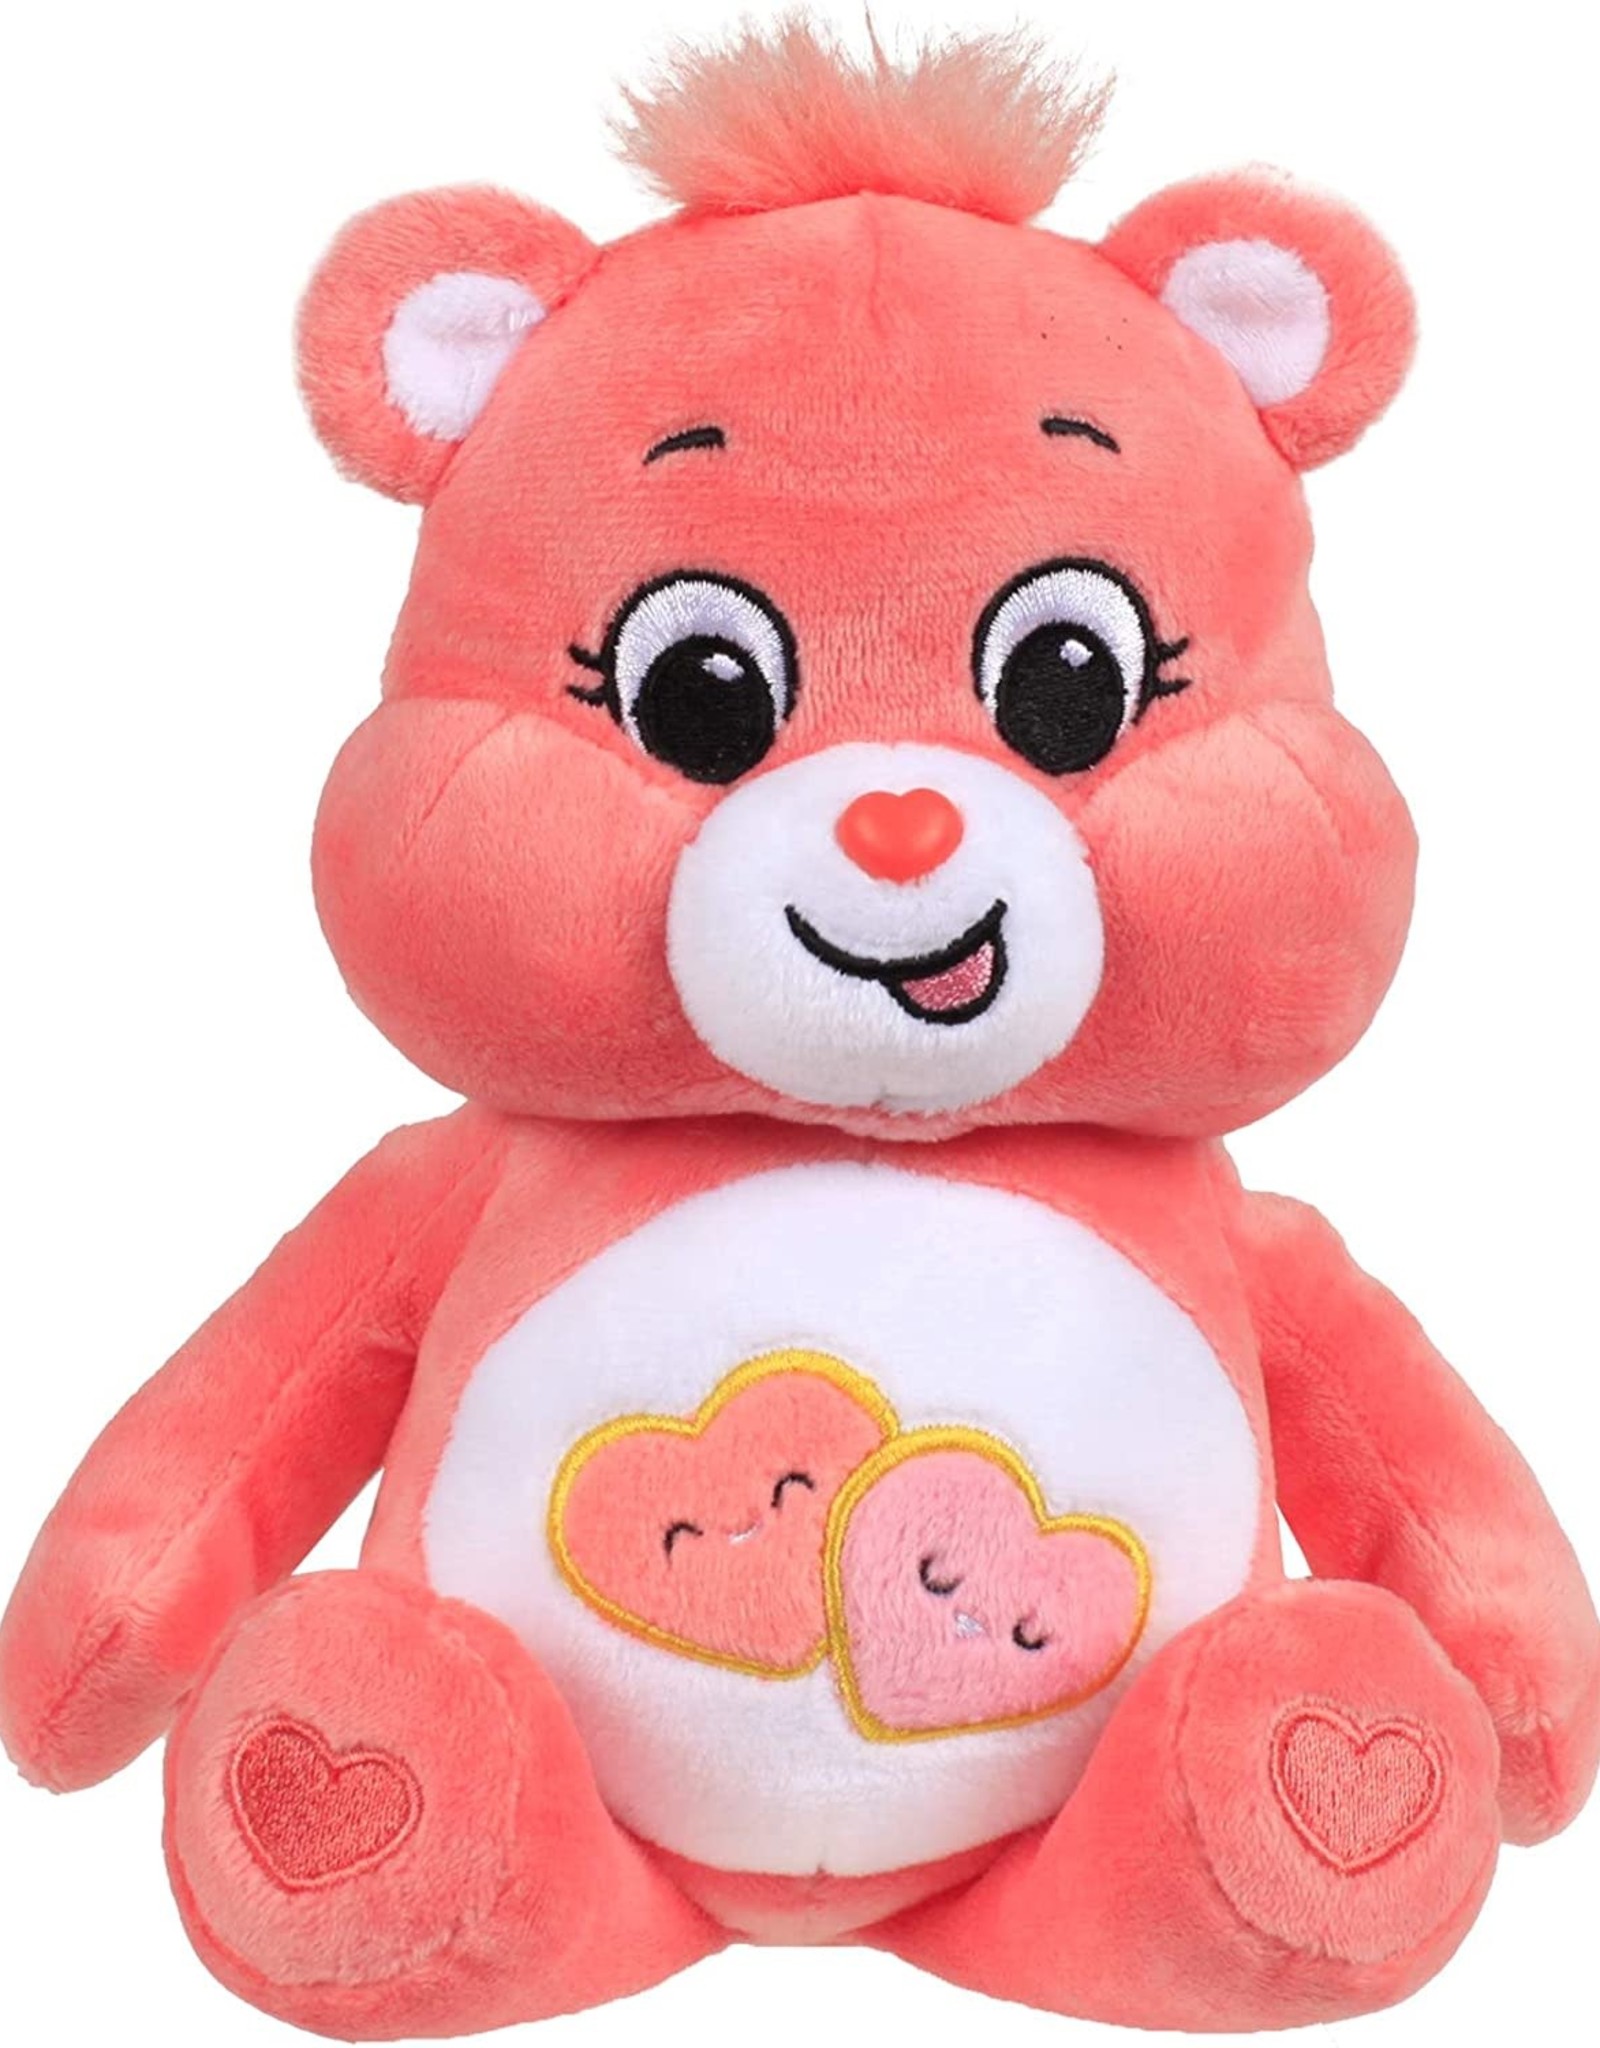 Hasbro Love a Lot Bear (Coral) Care Bears Bean Plush